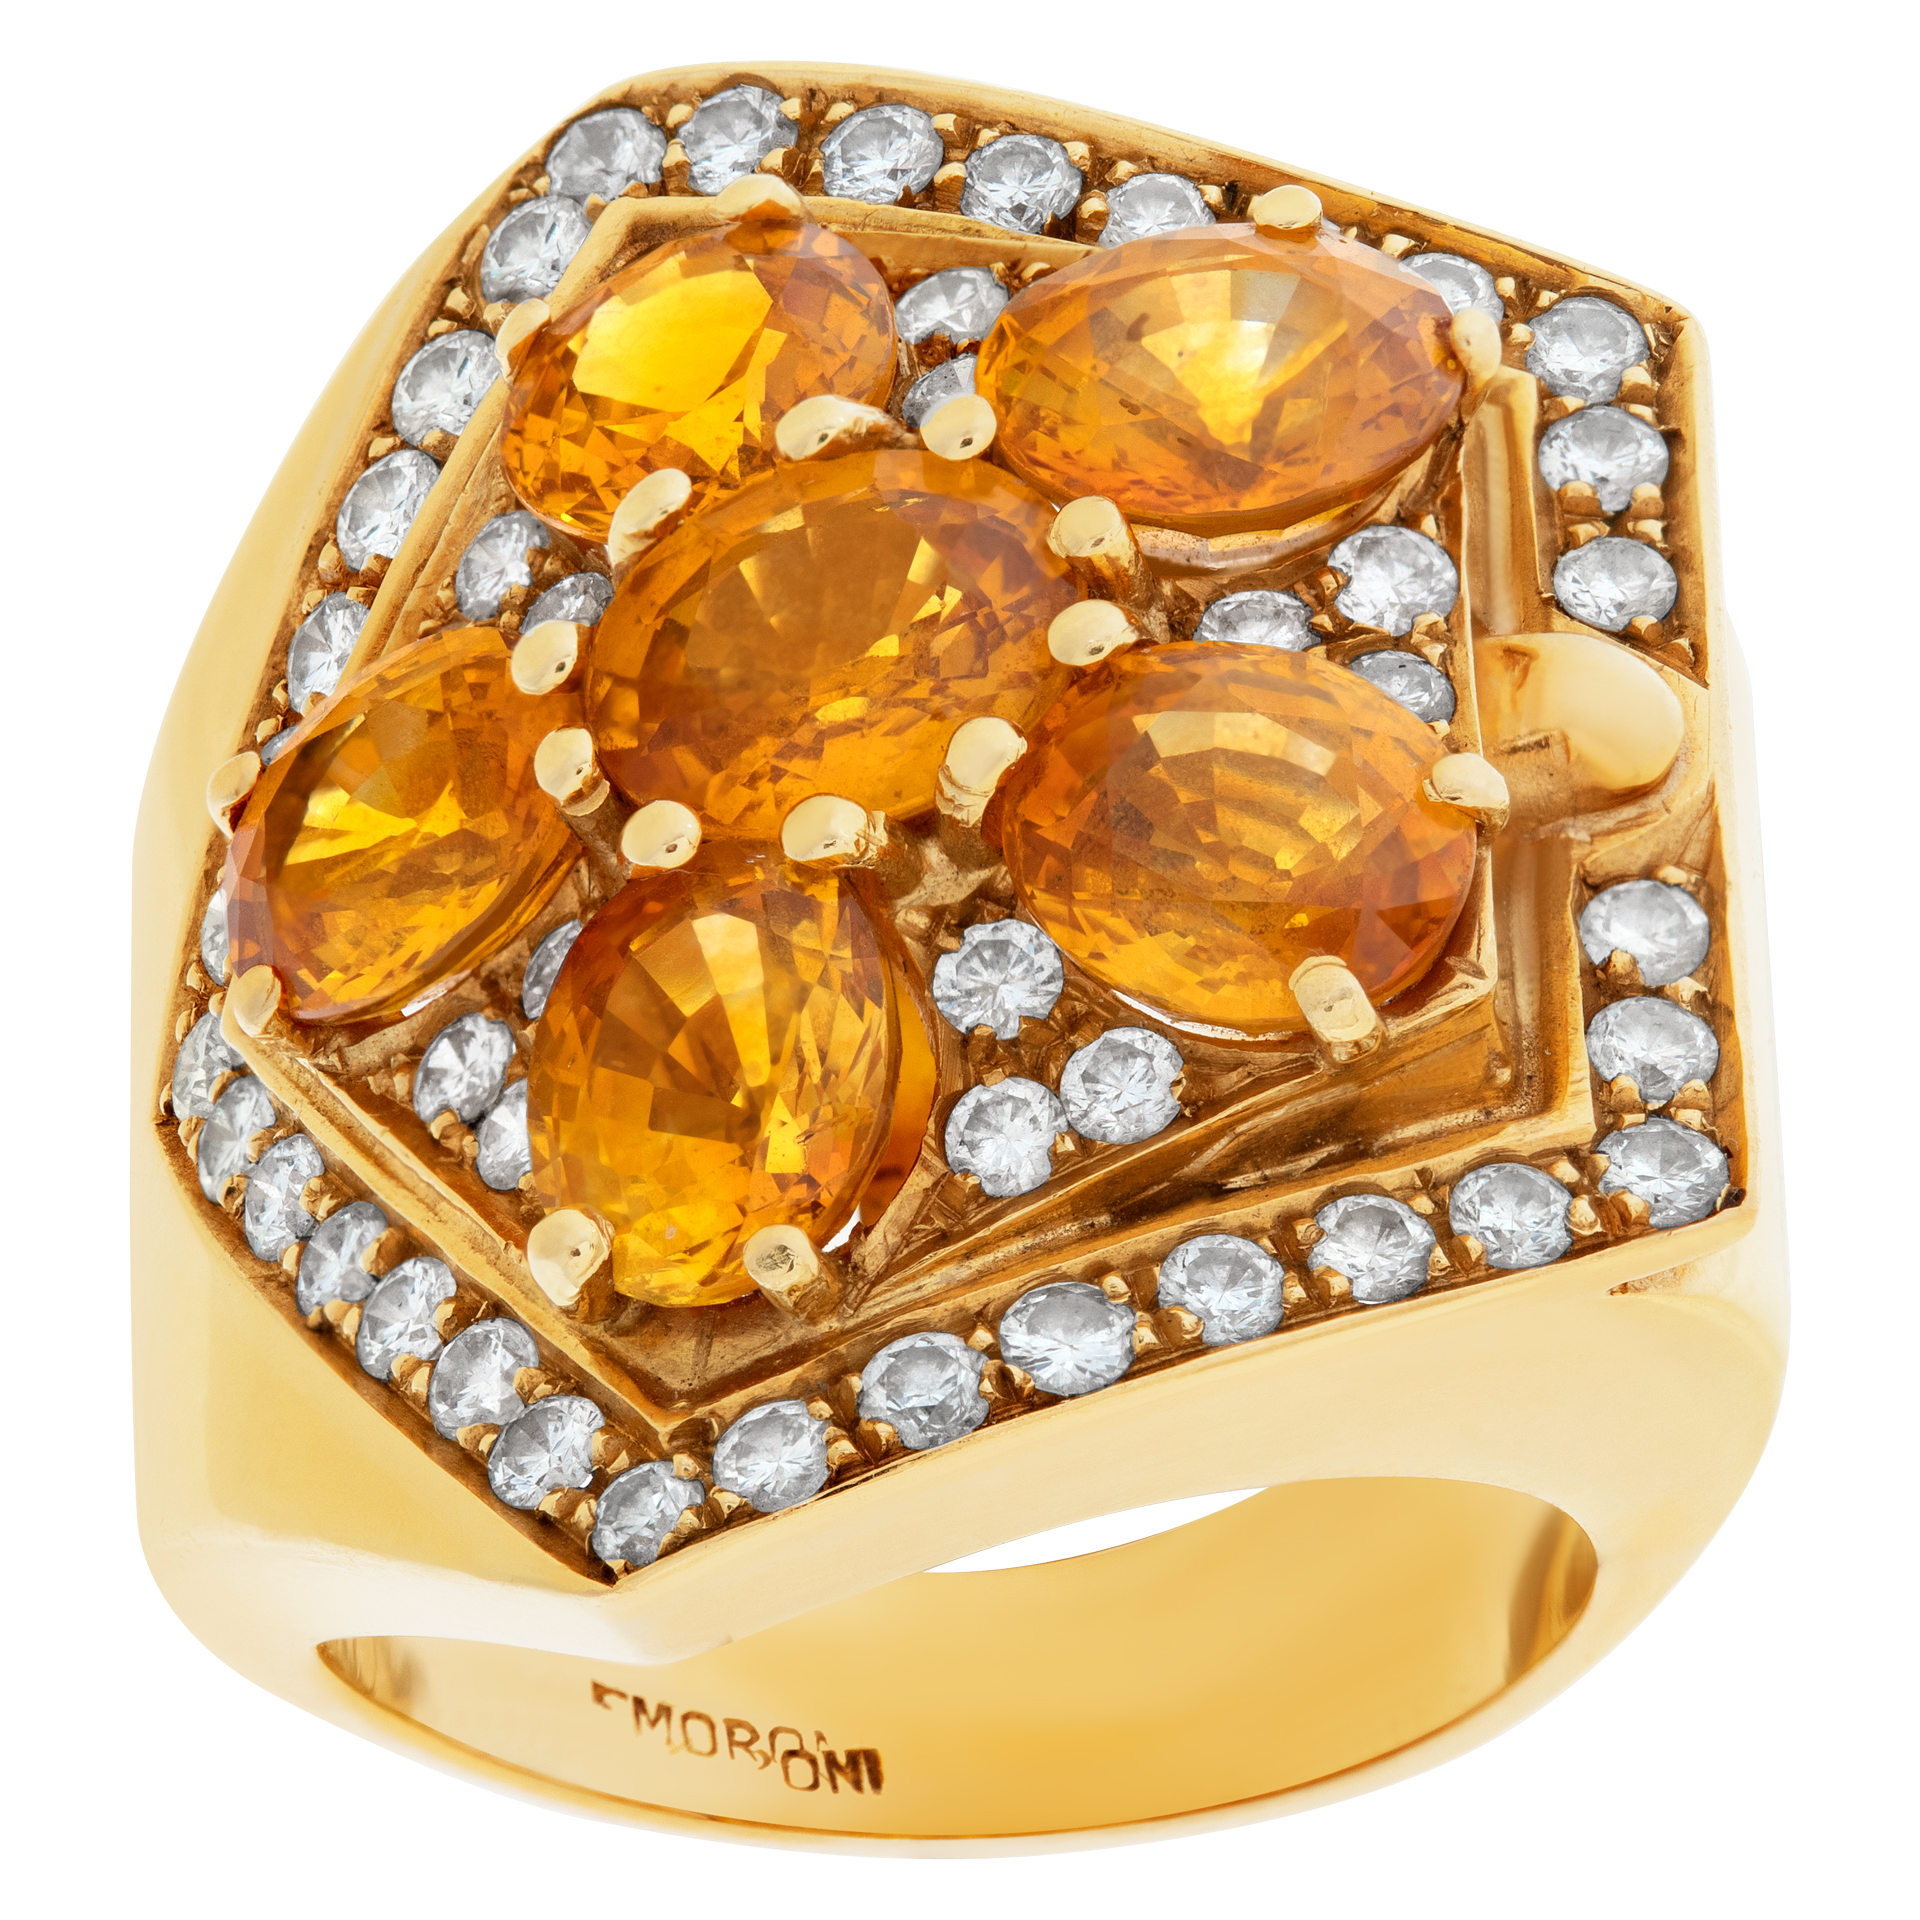 Oval brilliant cut orange sapphires & diamonds ring set in 18k gold